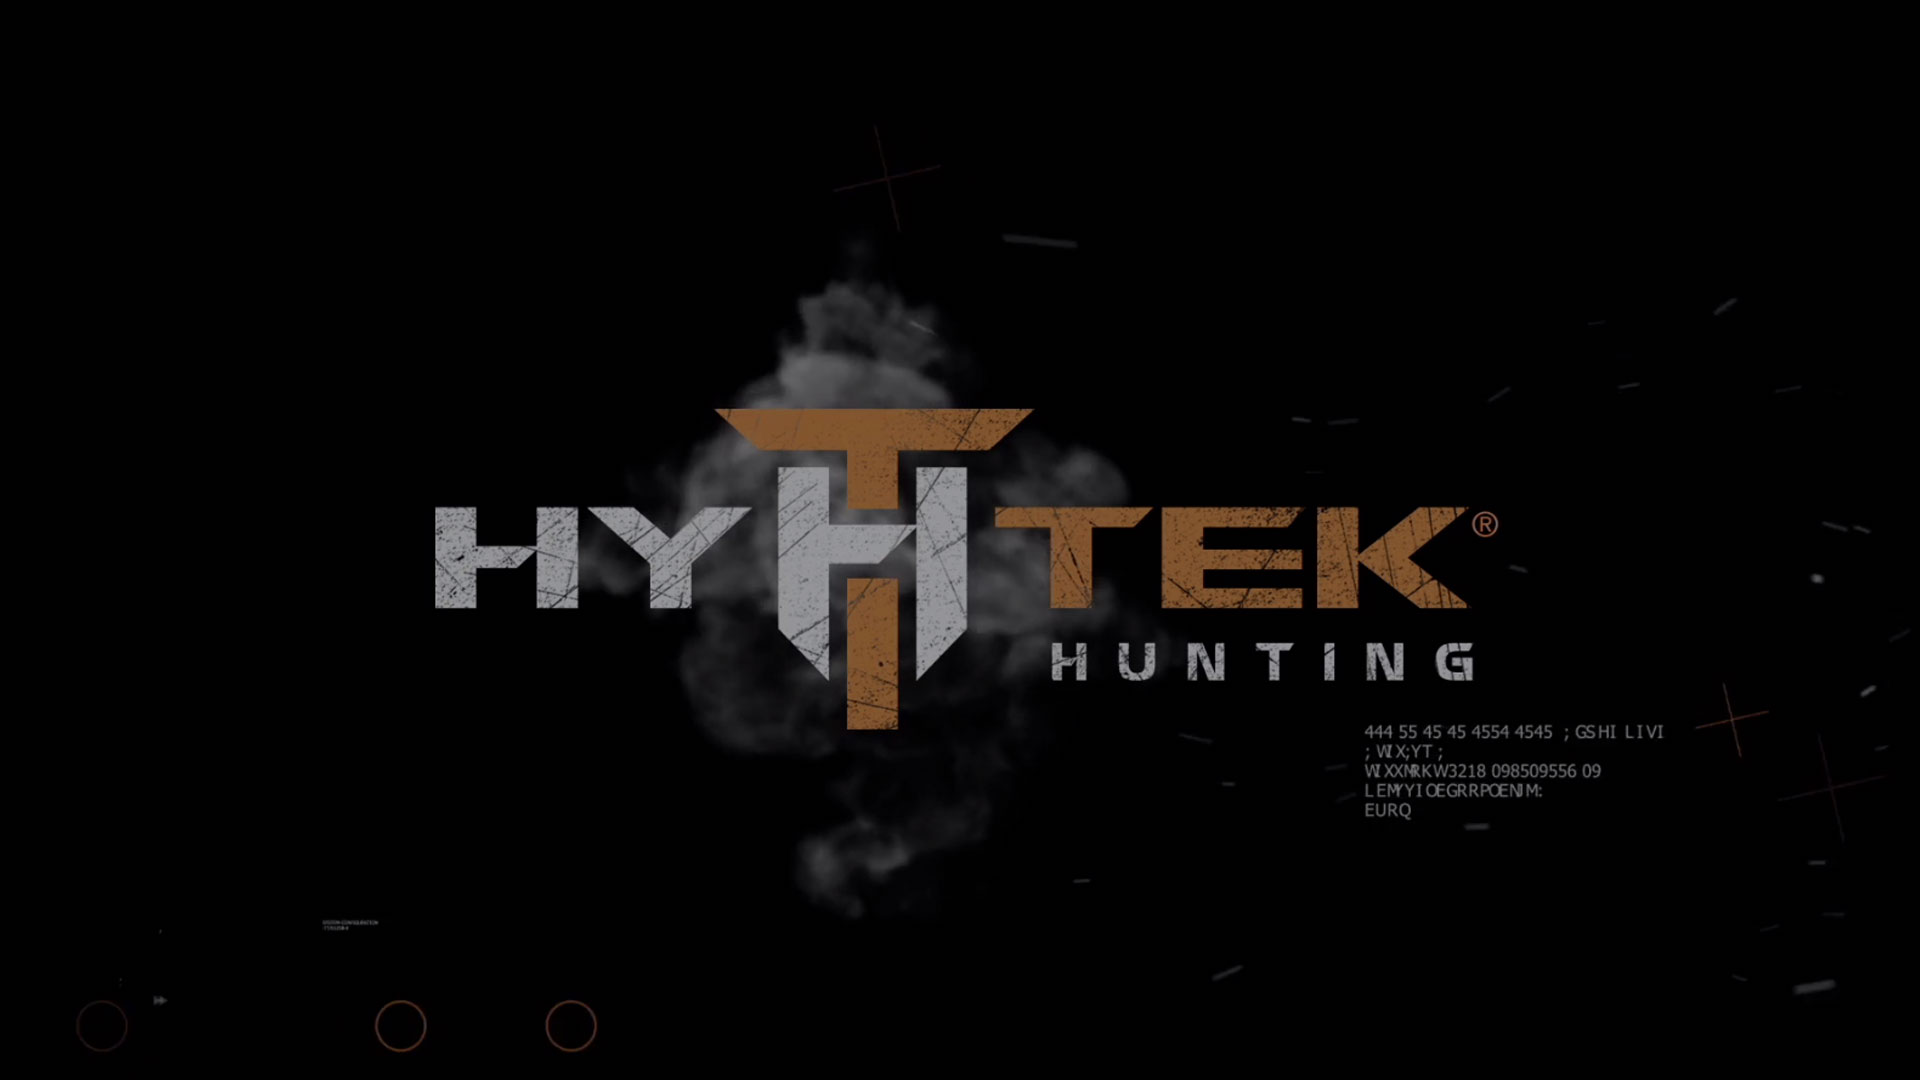 HyTek Hunting - Video Promo